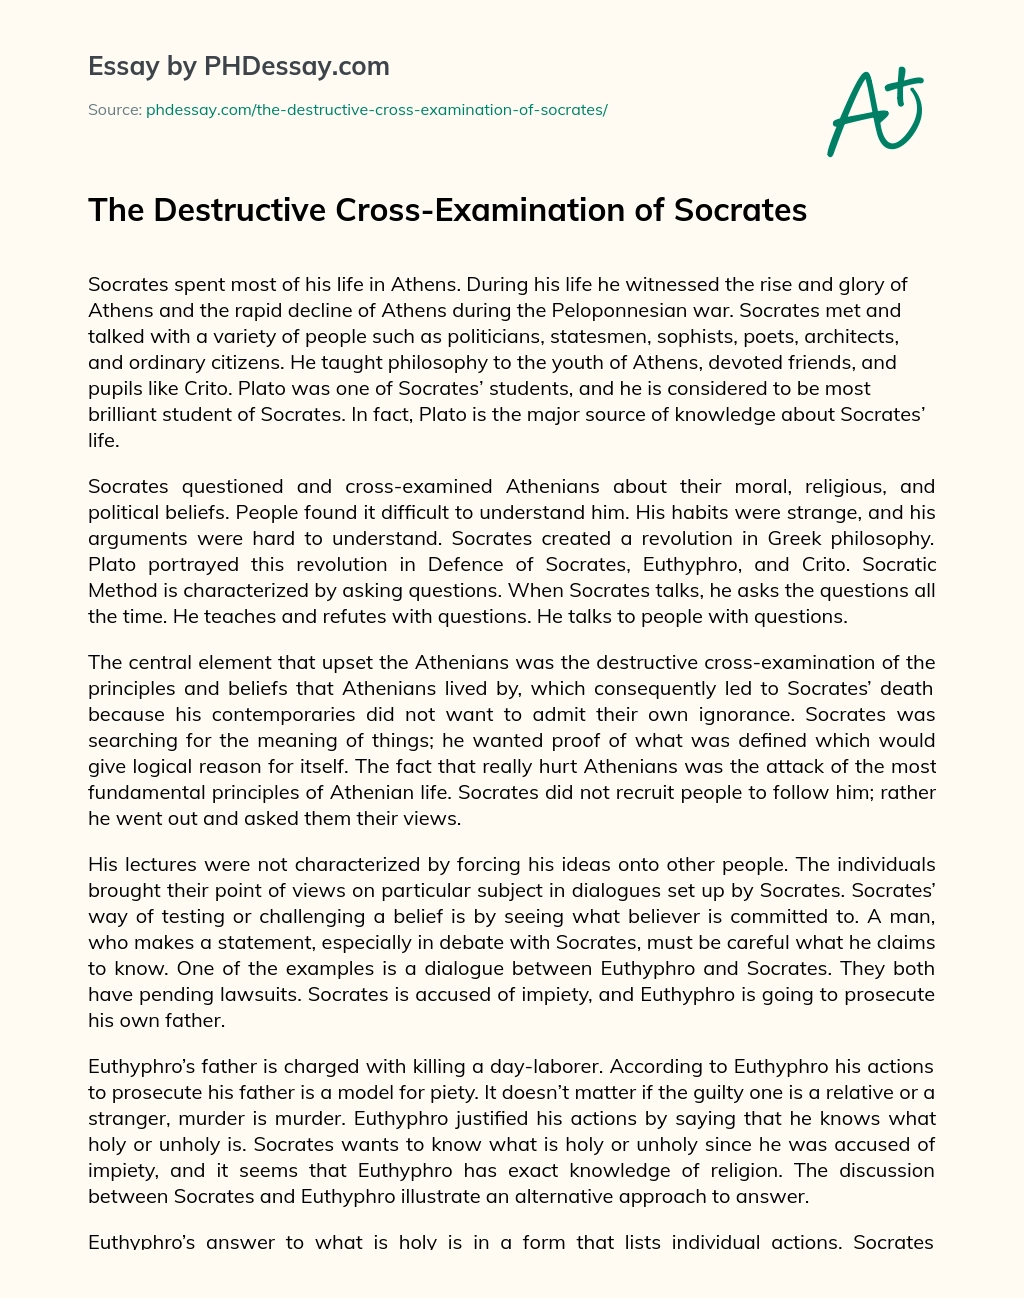 The Destructive Cross-Examination of Socrates essay